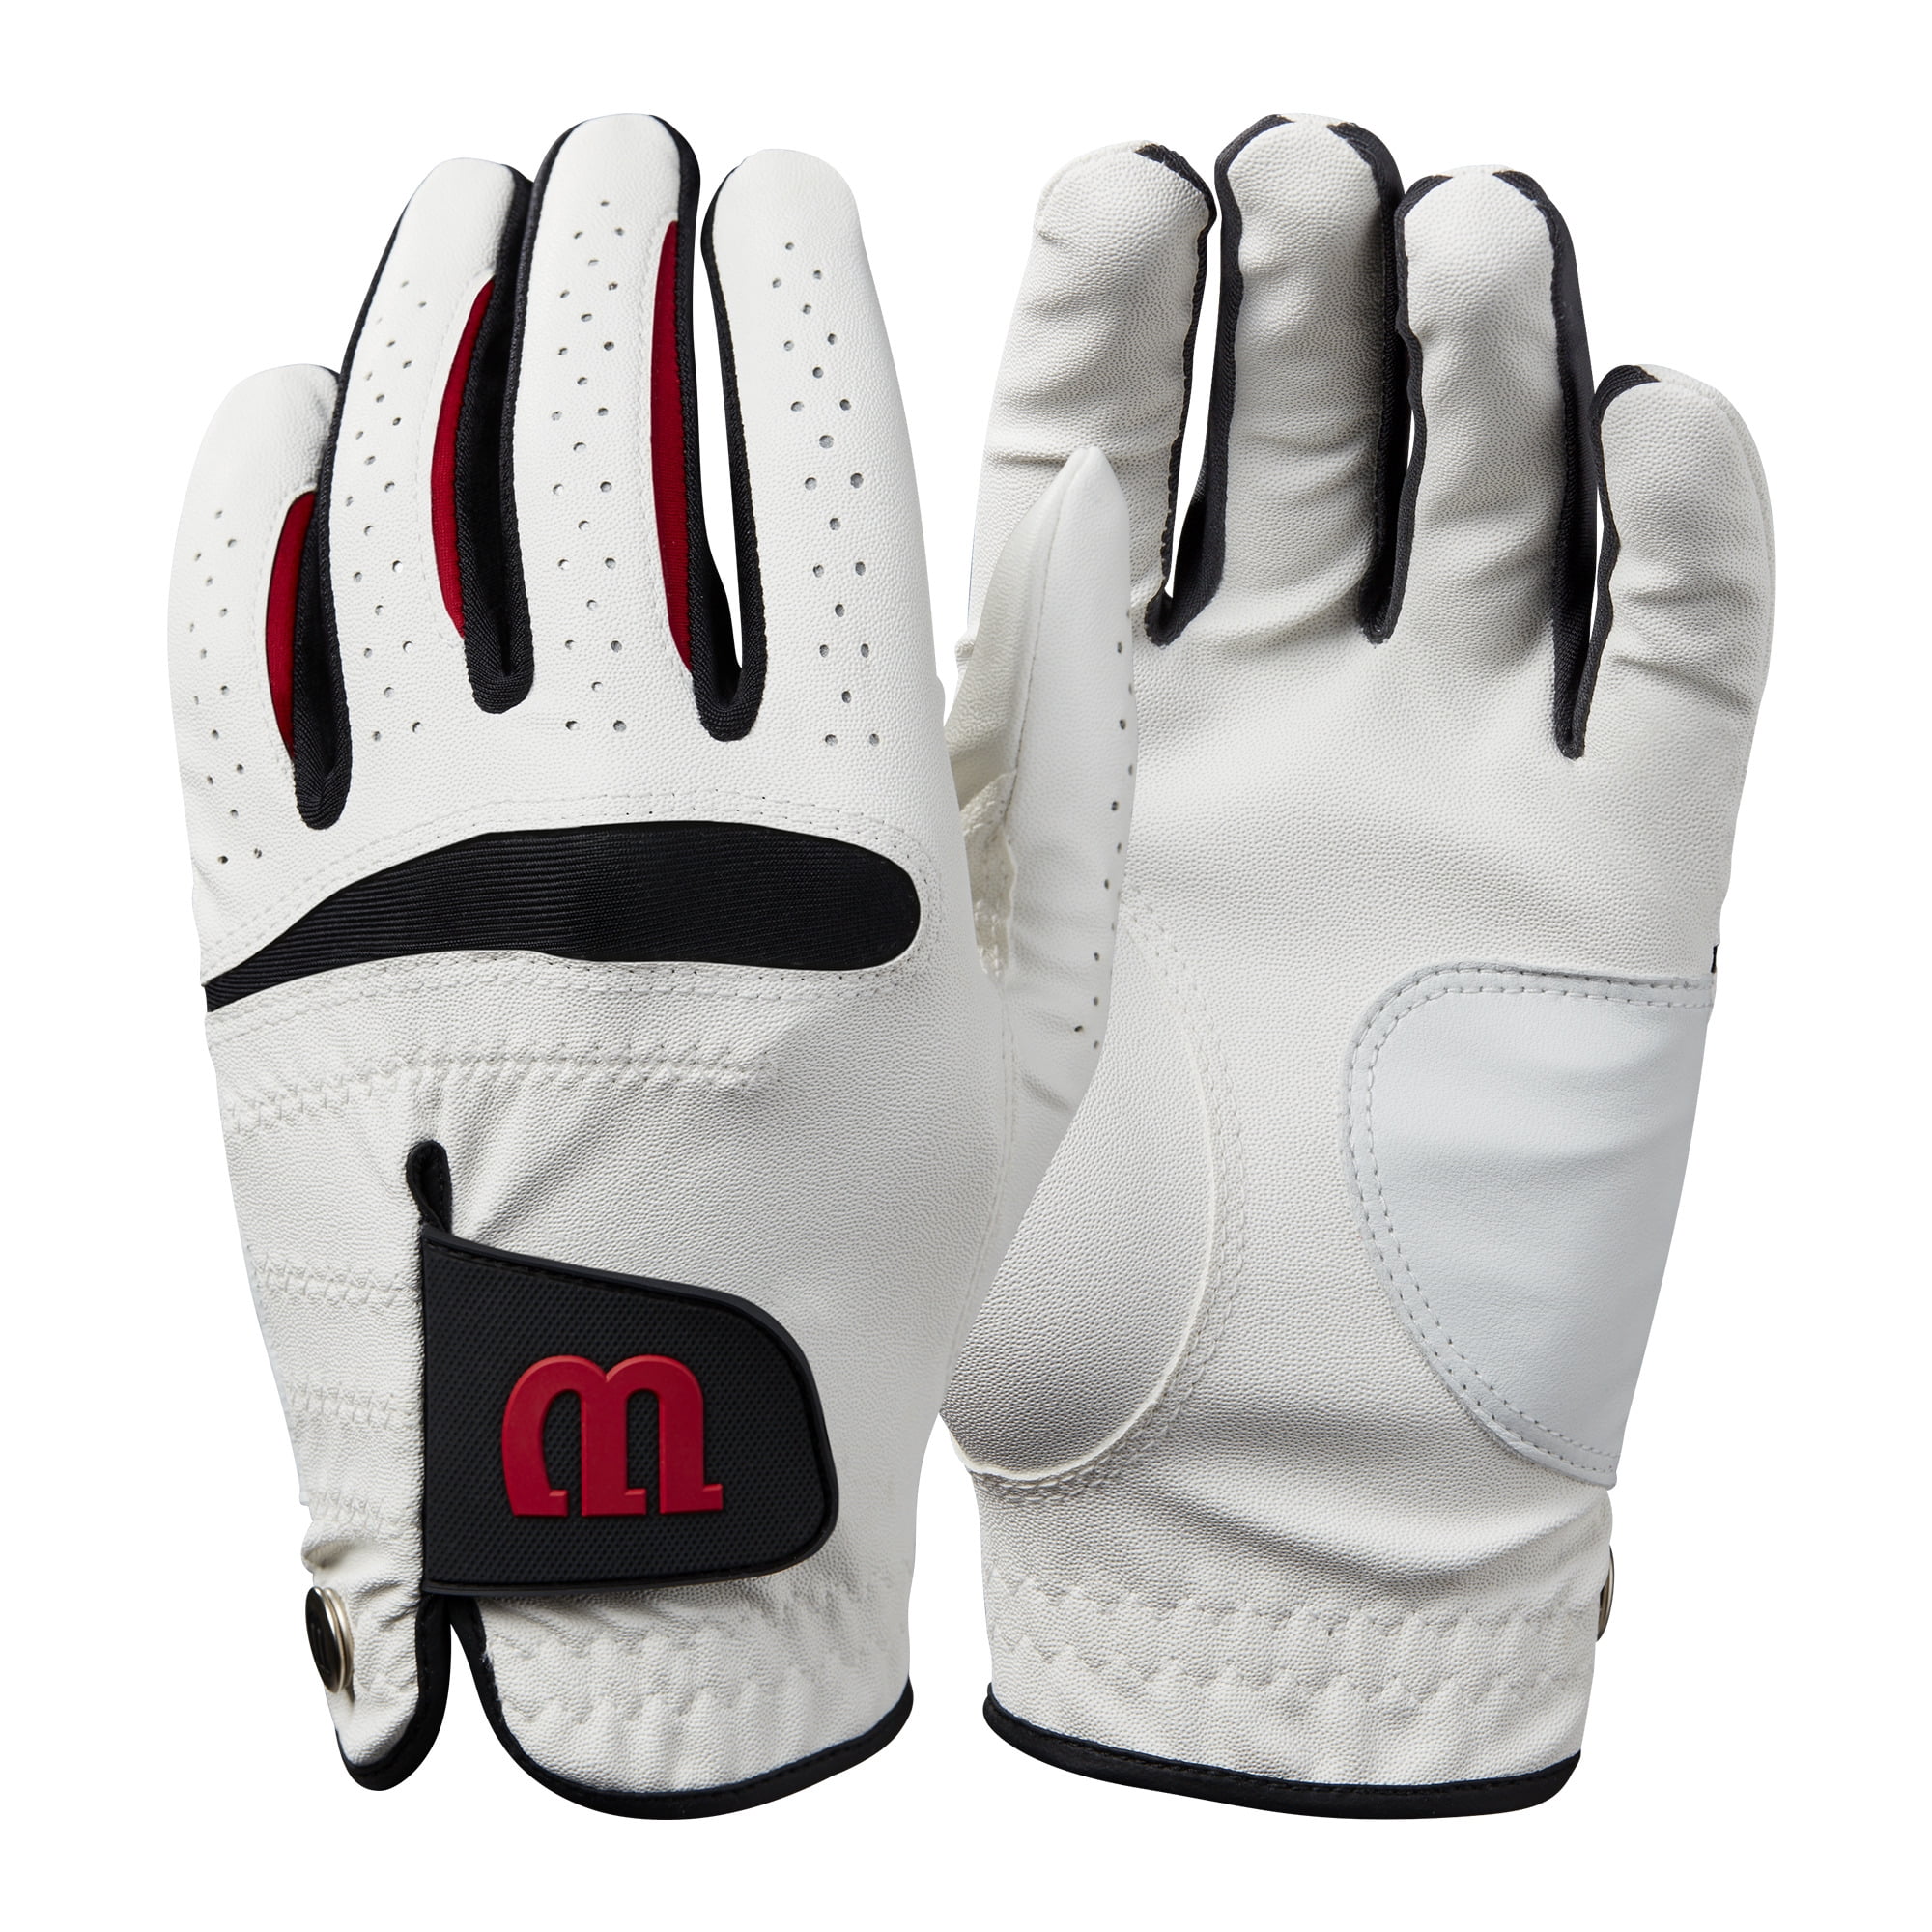 Wilson Feel Plus Golf Glove - Men's Right Hand, Size Large